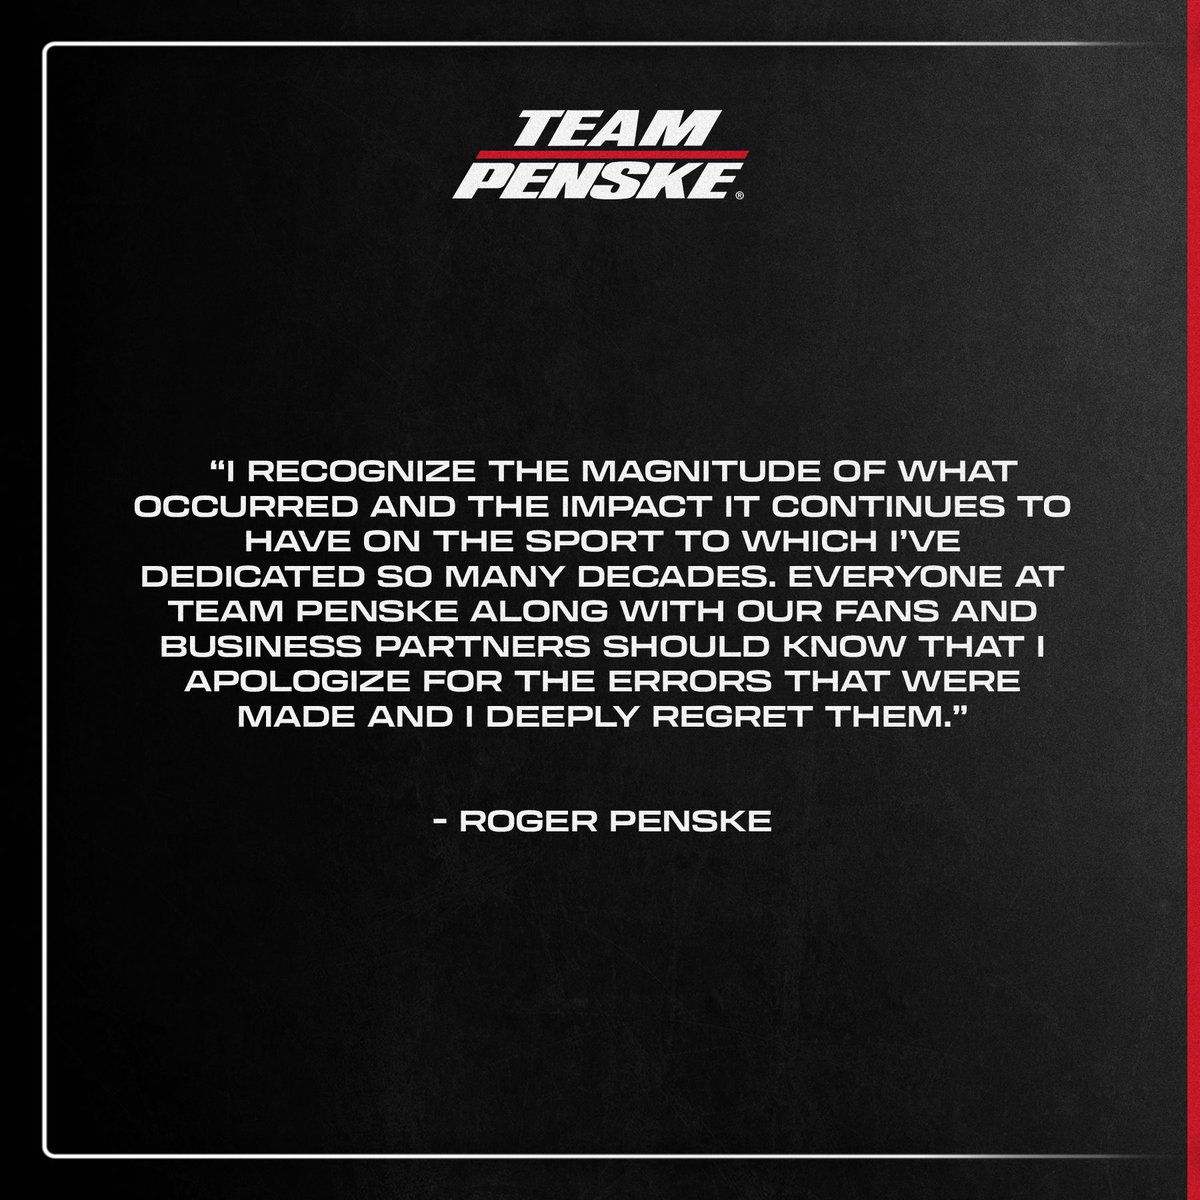 Statement from Team Penske, Roger Penske on team’s response to recent INDYCAR penalties: